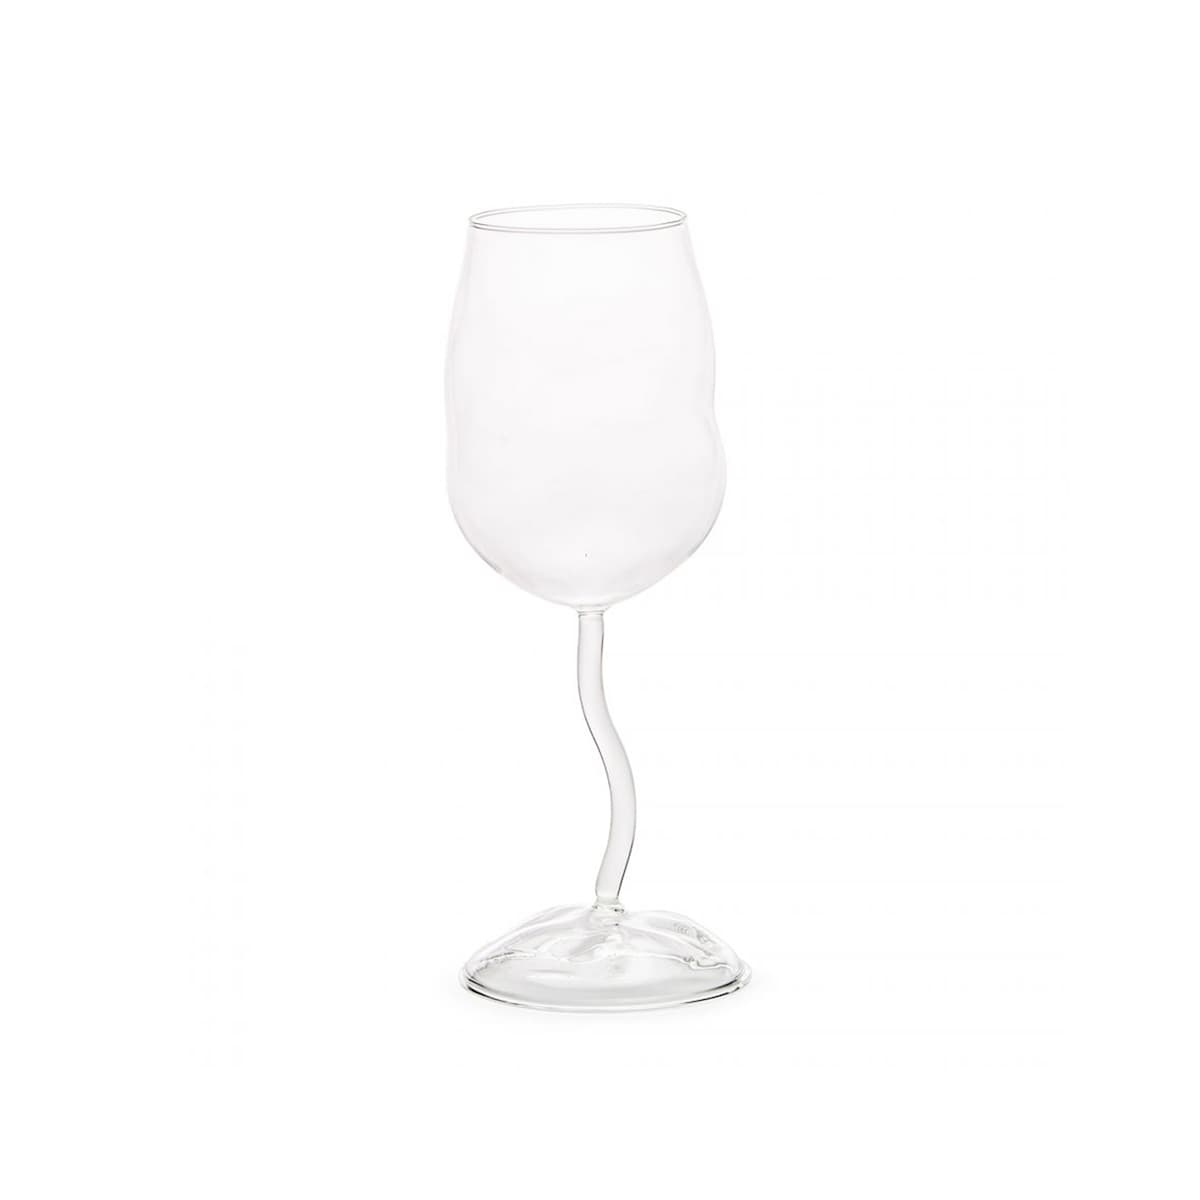 Riedel Veloce Riesling White Wine Glasses, Set of 2 - Worldshop